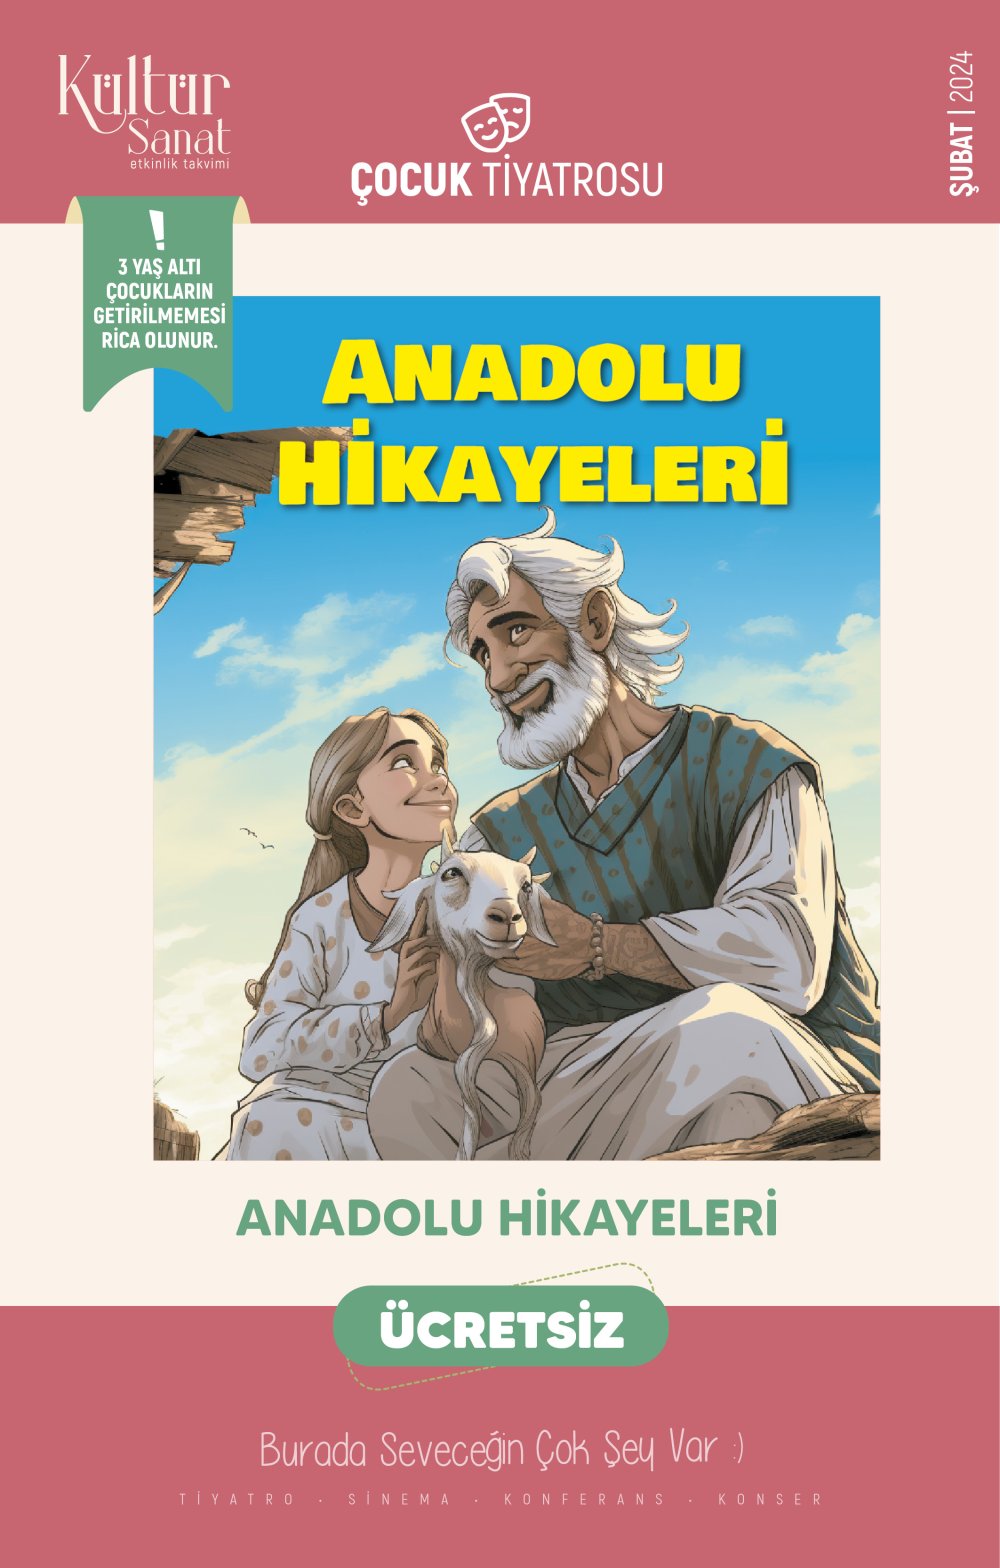 Anadolu Hikayeleri